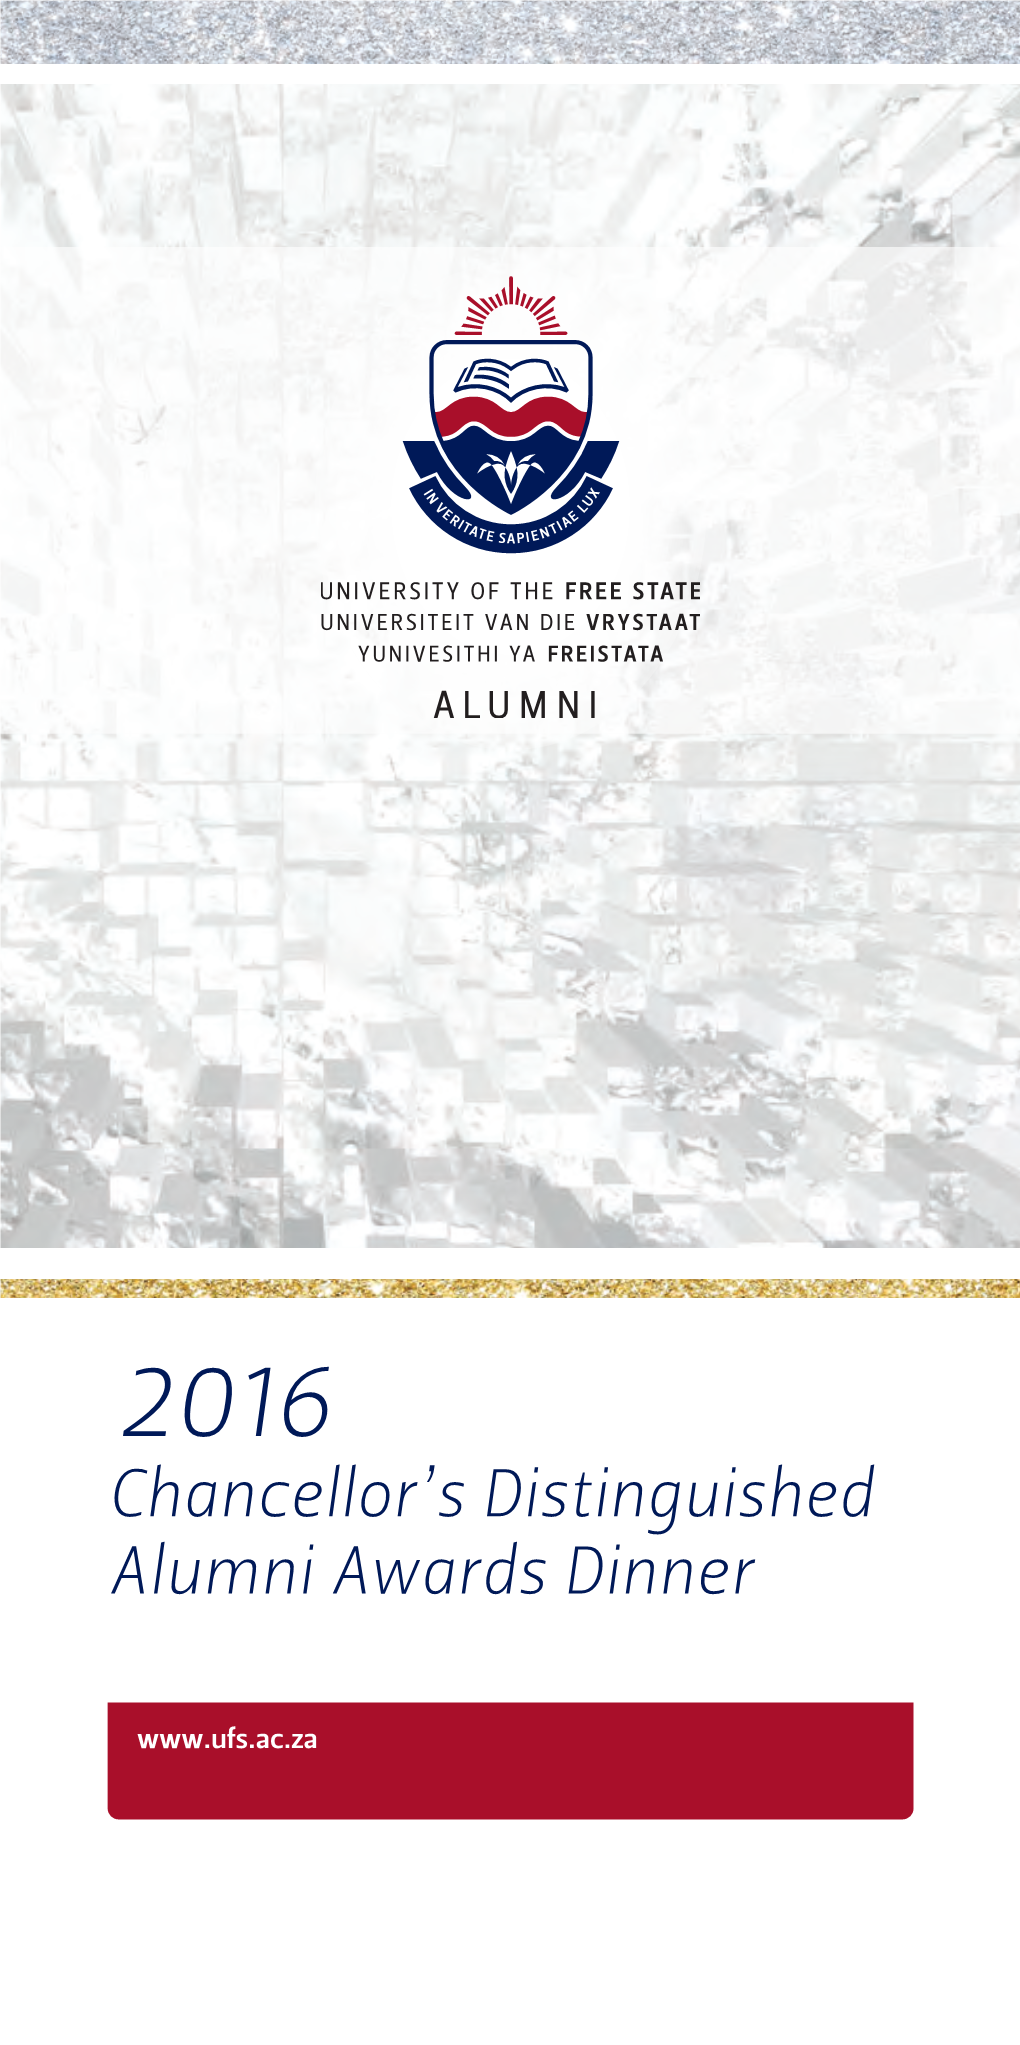 Chancellor's Distinguished Alumni Awards Dinner